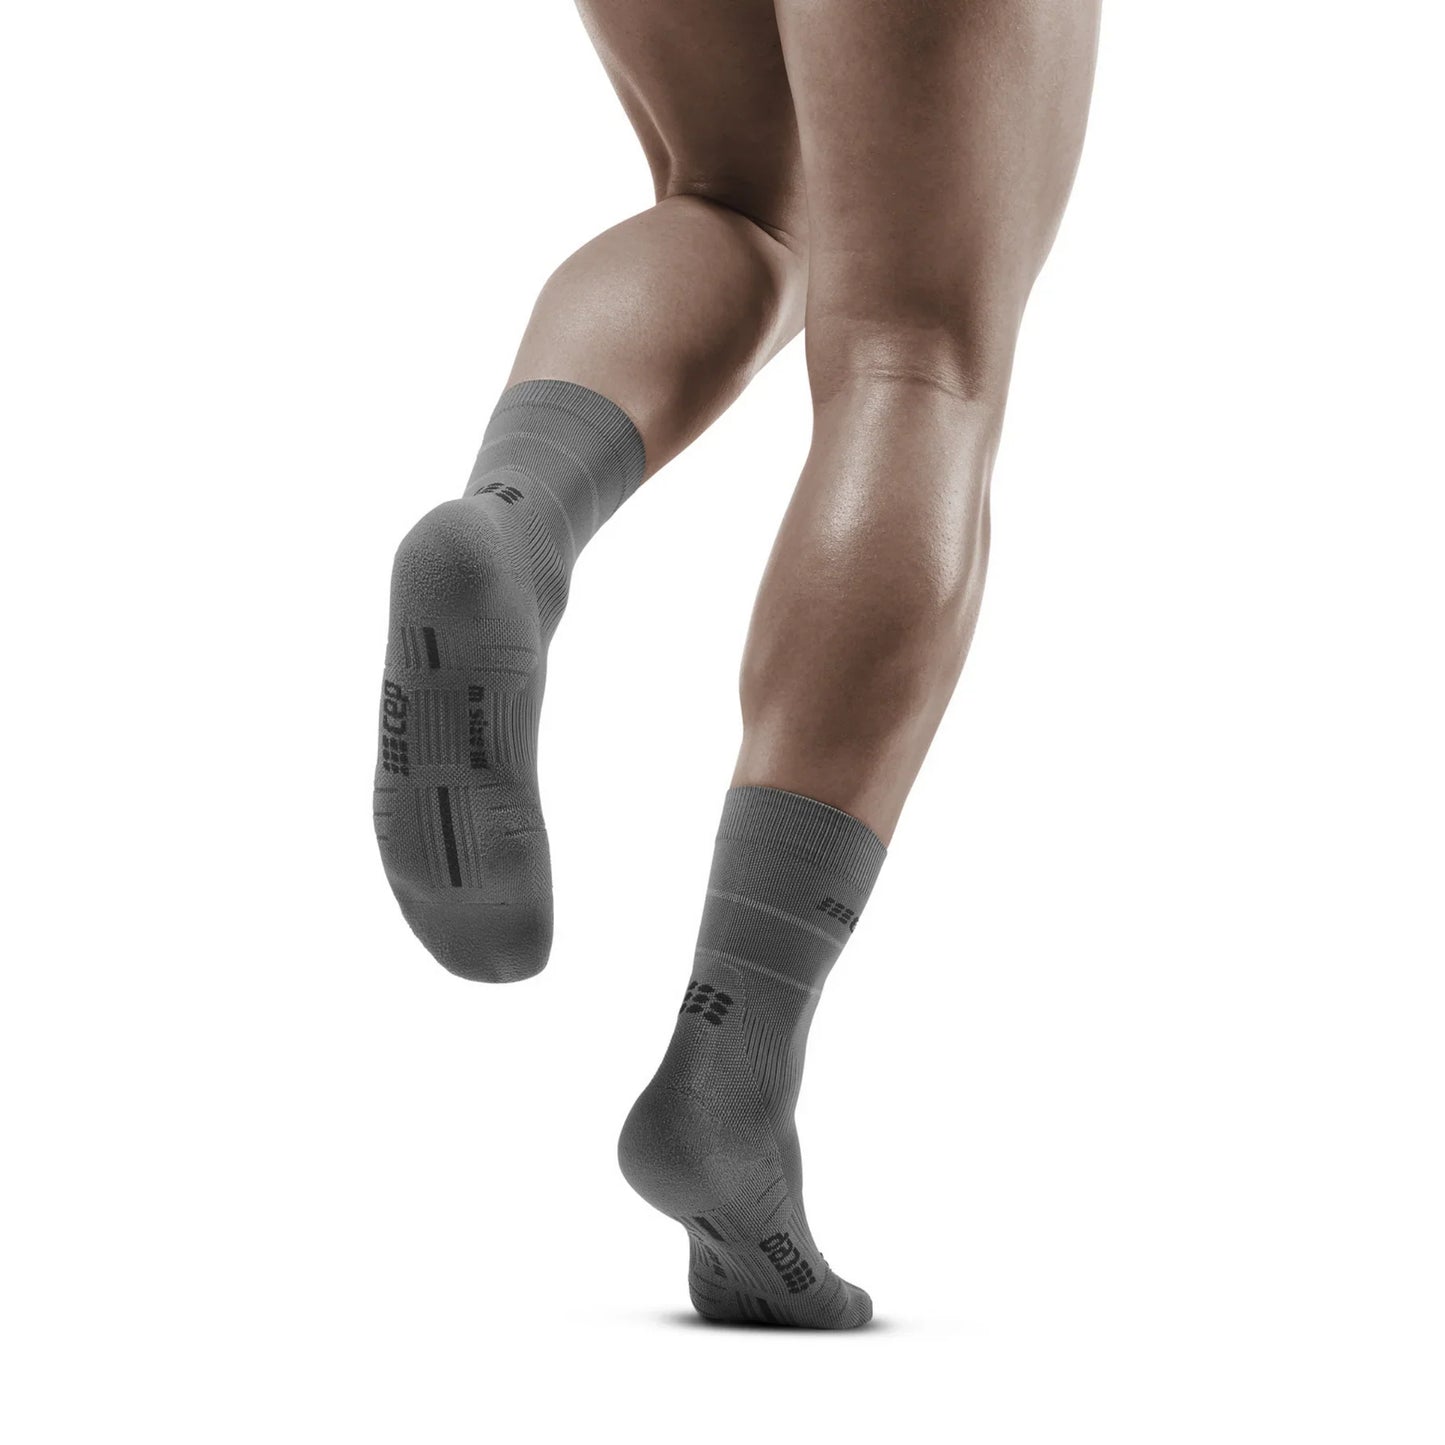 CEP Reflective Mid Cut Sock Men's - Gray